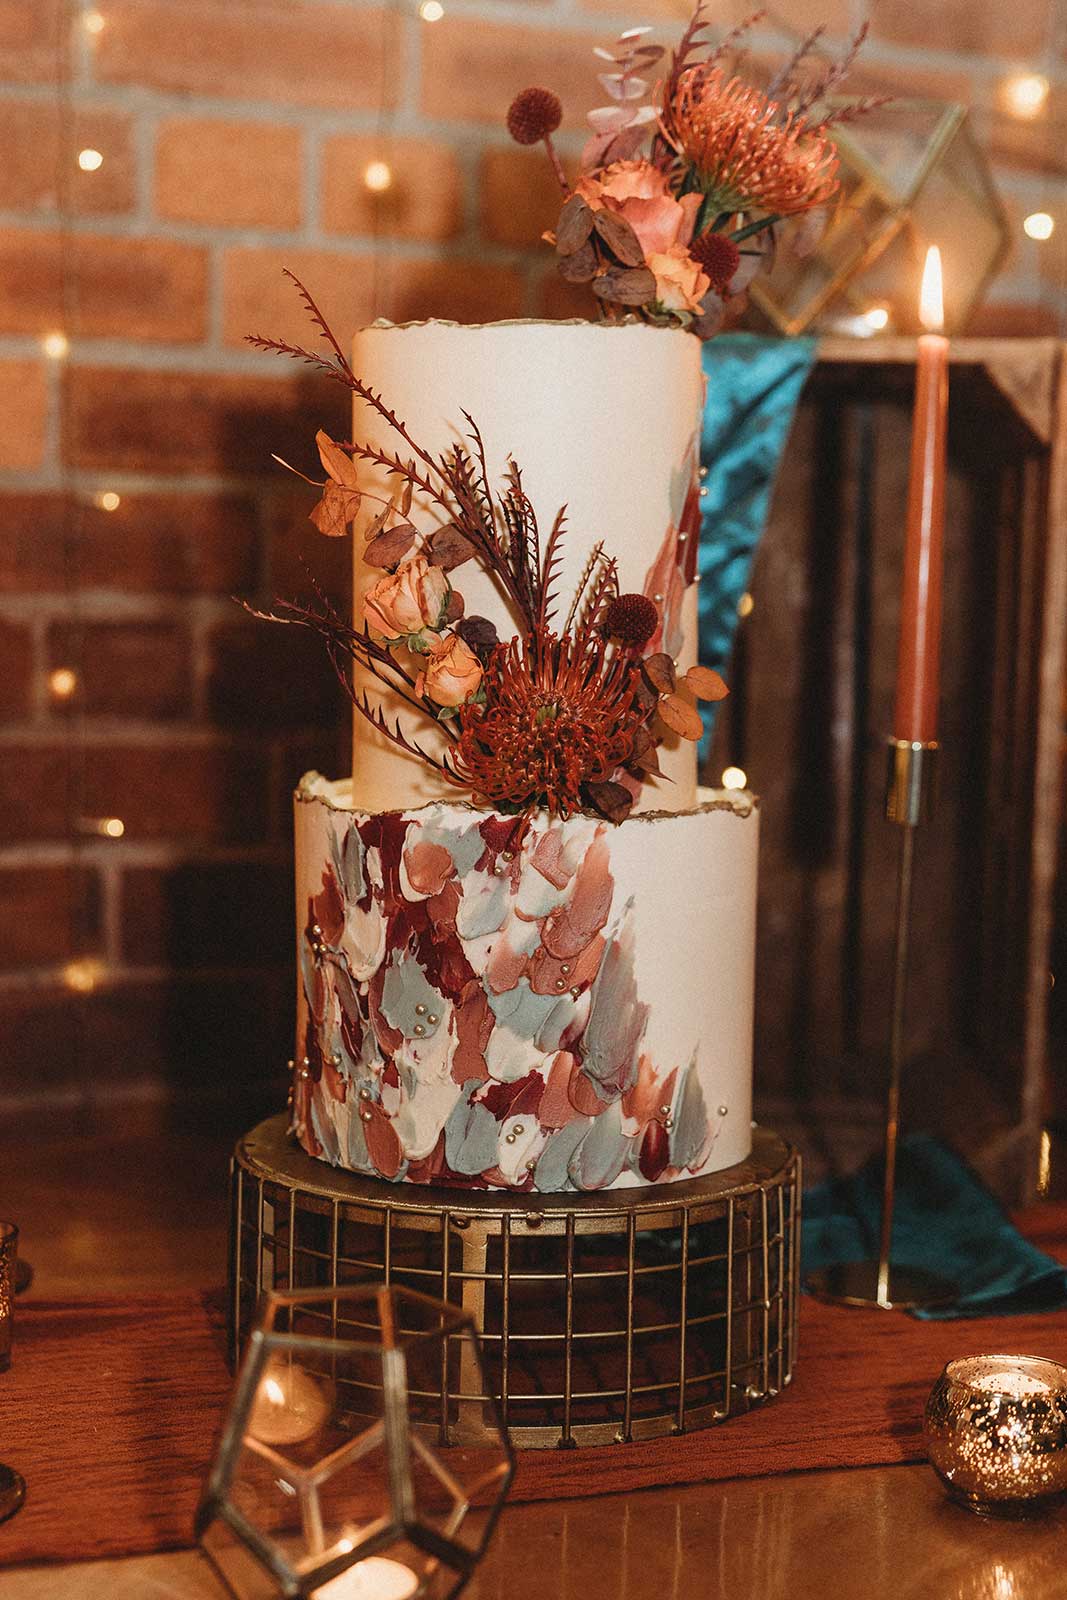 Elsecar Wedding Cake